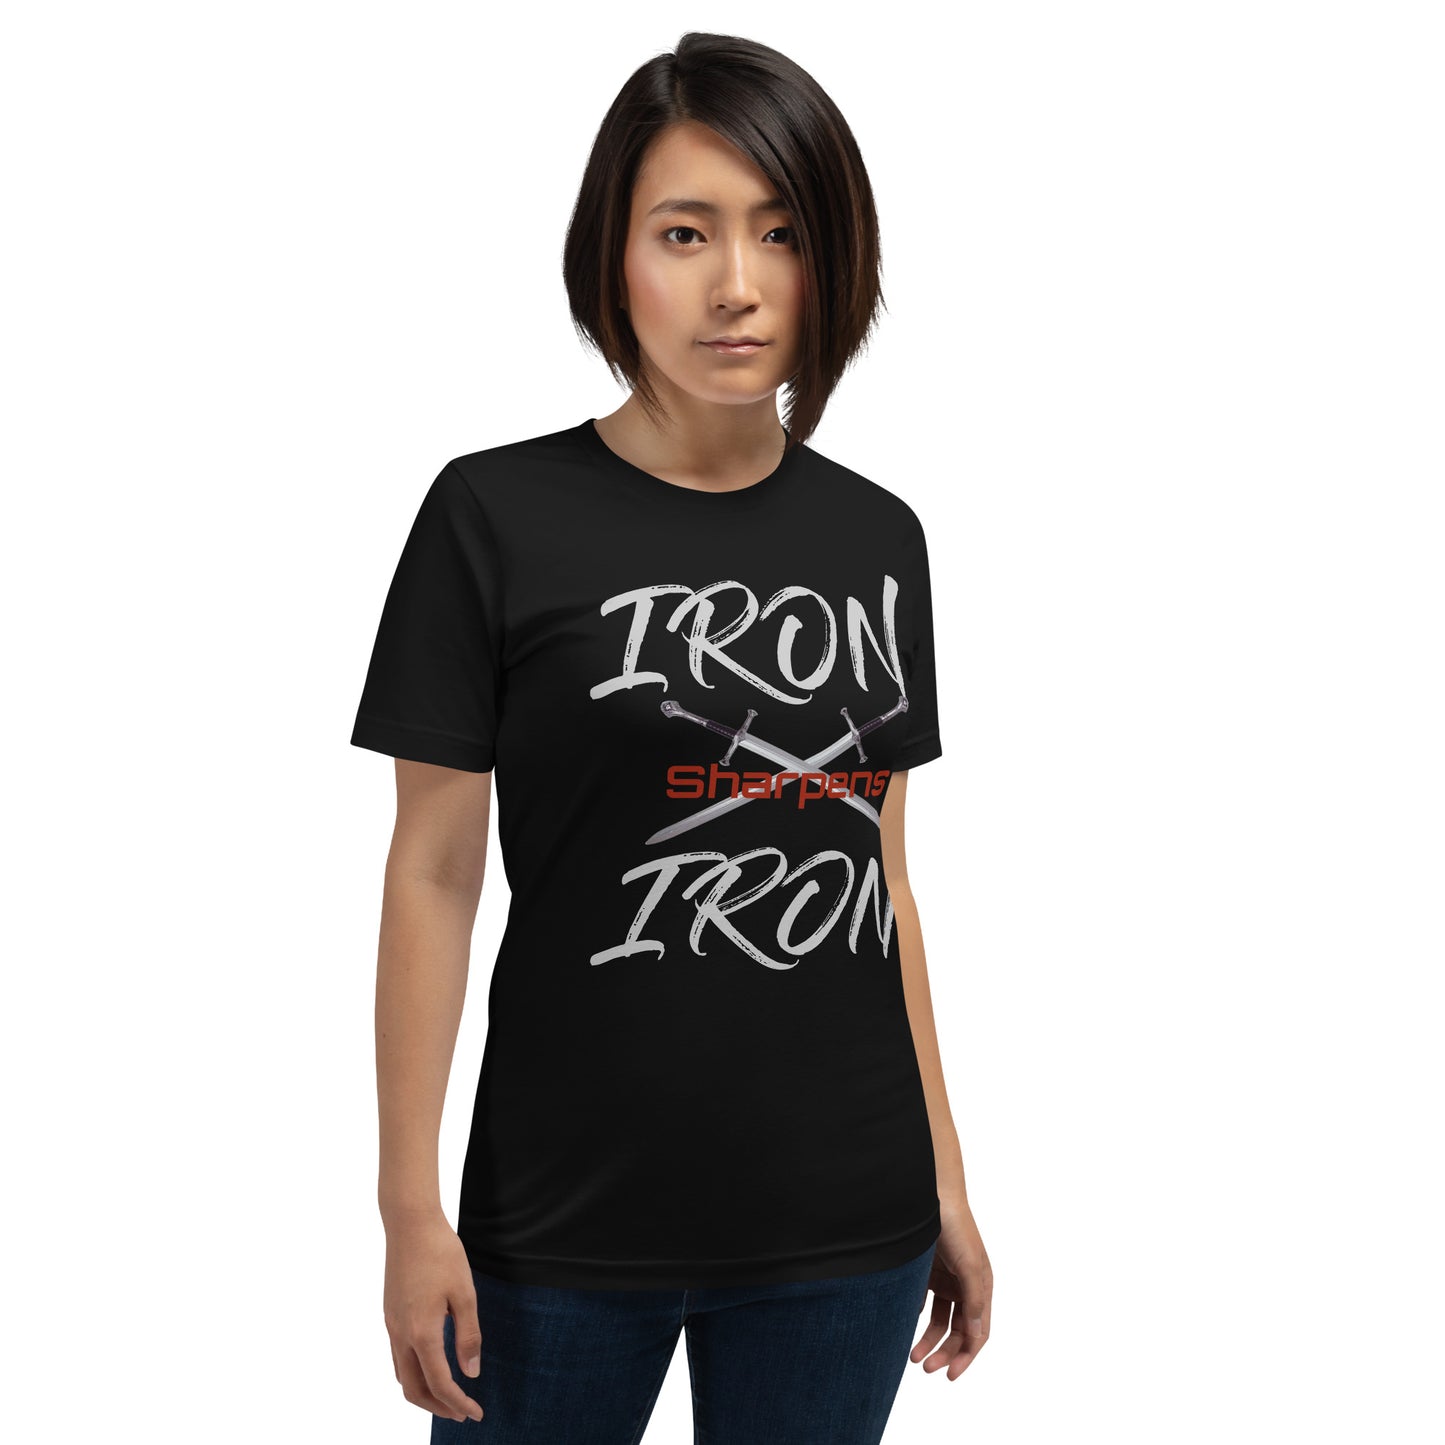 Iron Sharpens Iron Unisex t-shirt